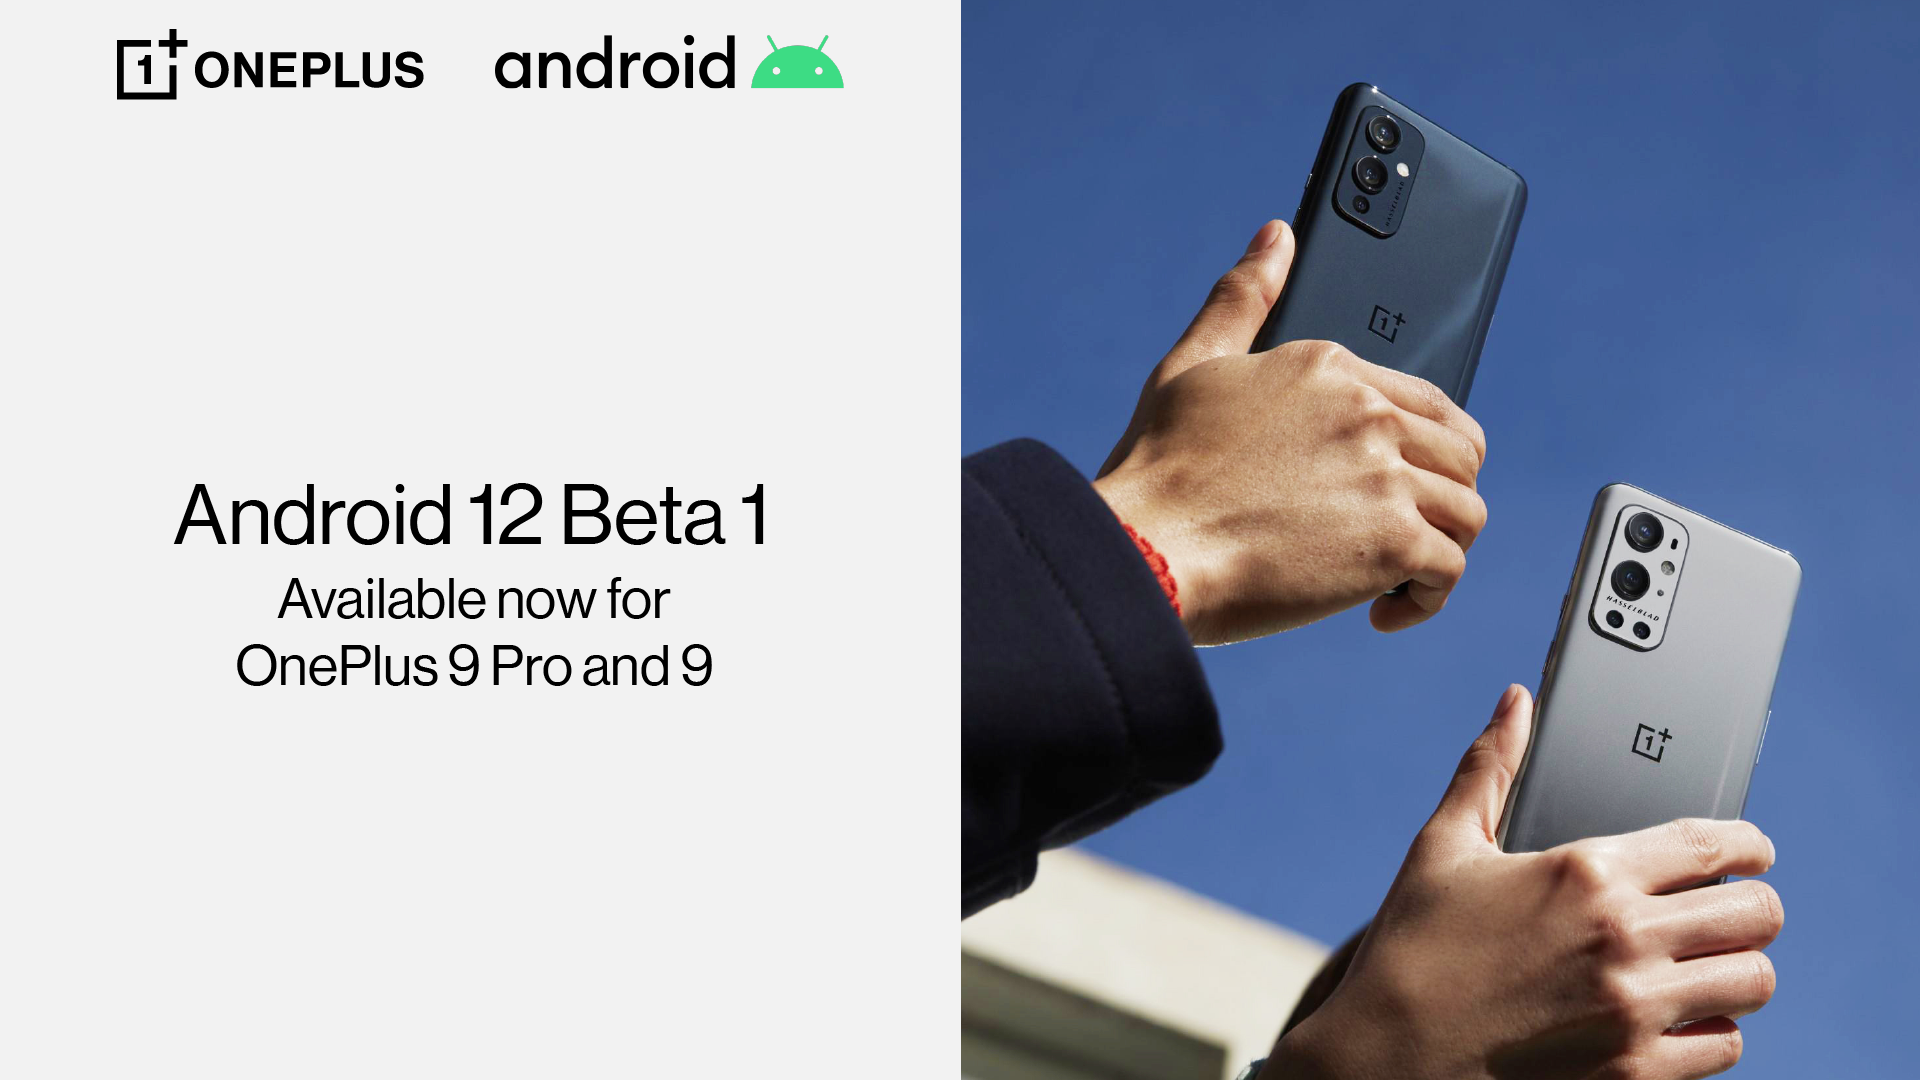 OnePlus 9 Series Android 12 Beta 1 Design